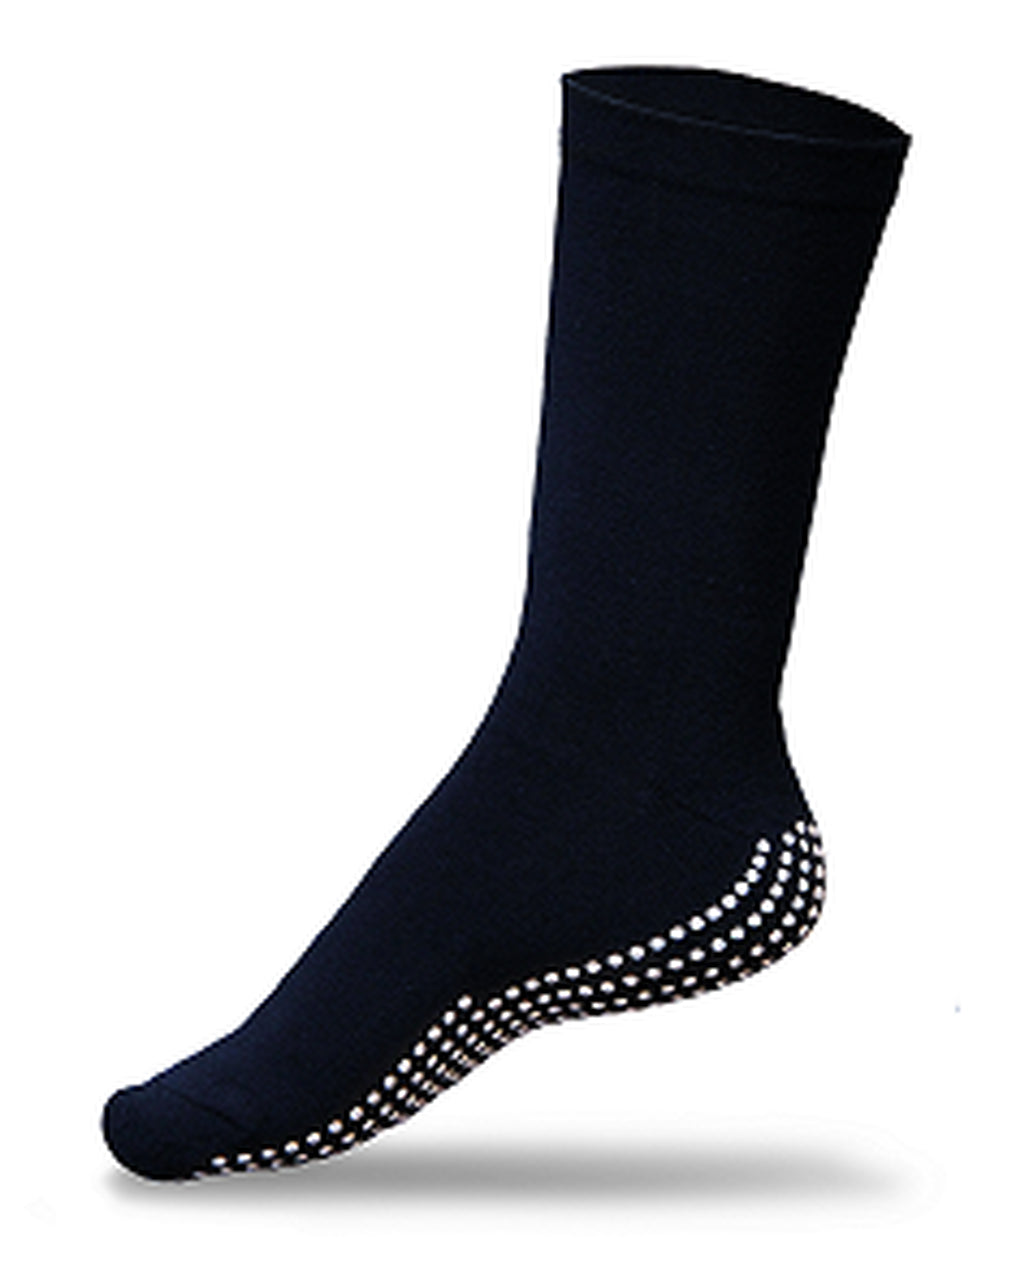 Black Non-Slip Circulation Socks - The Sockery